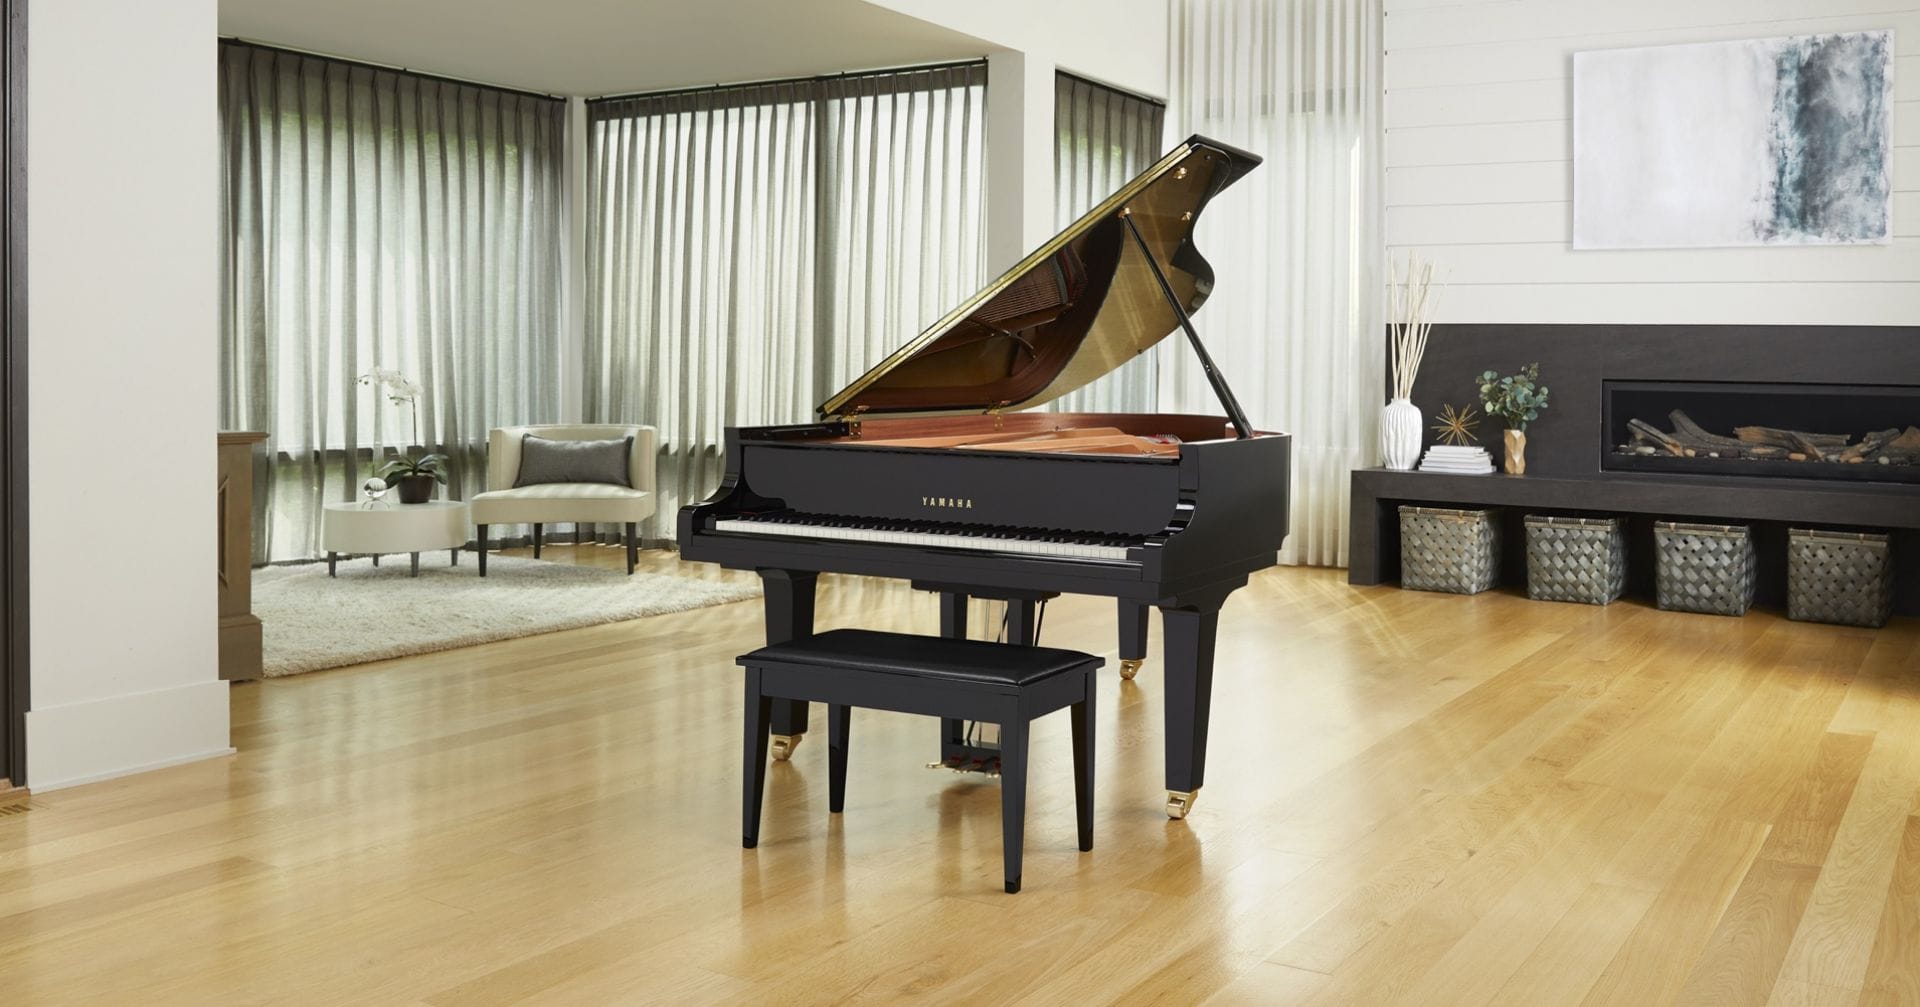 piano à queue Yamaha GB1K